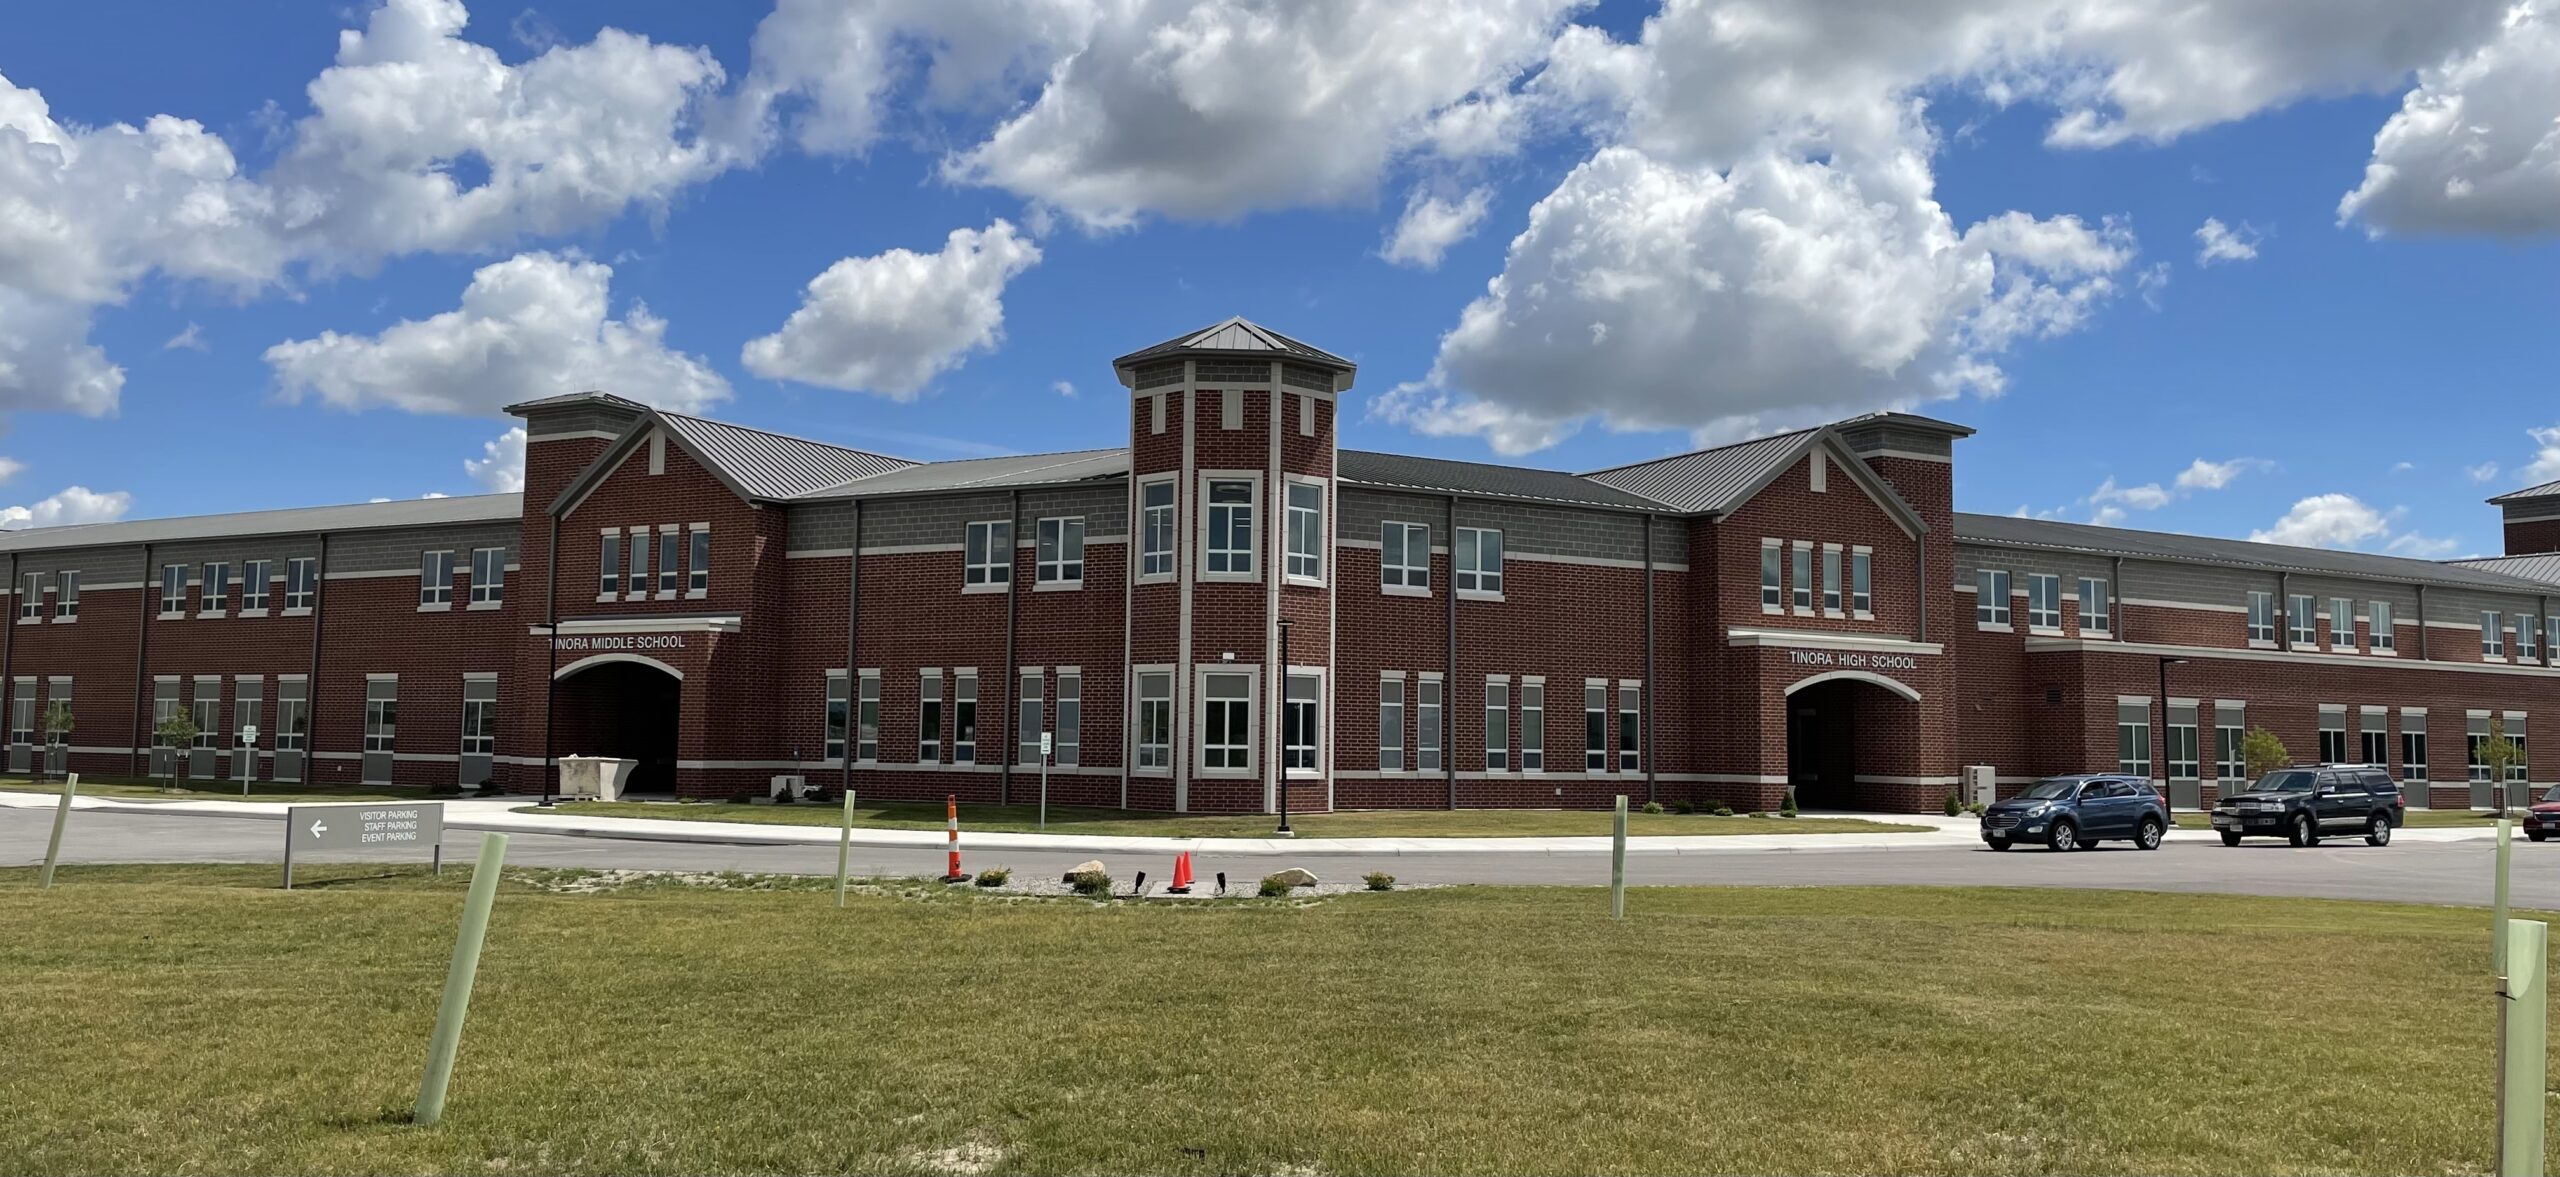 Tinora Middle/High School – Defiance, Ohio